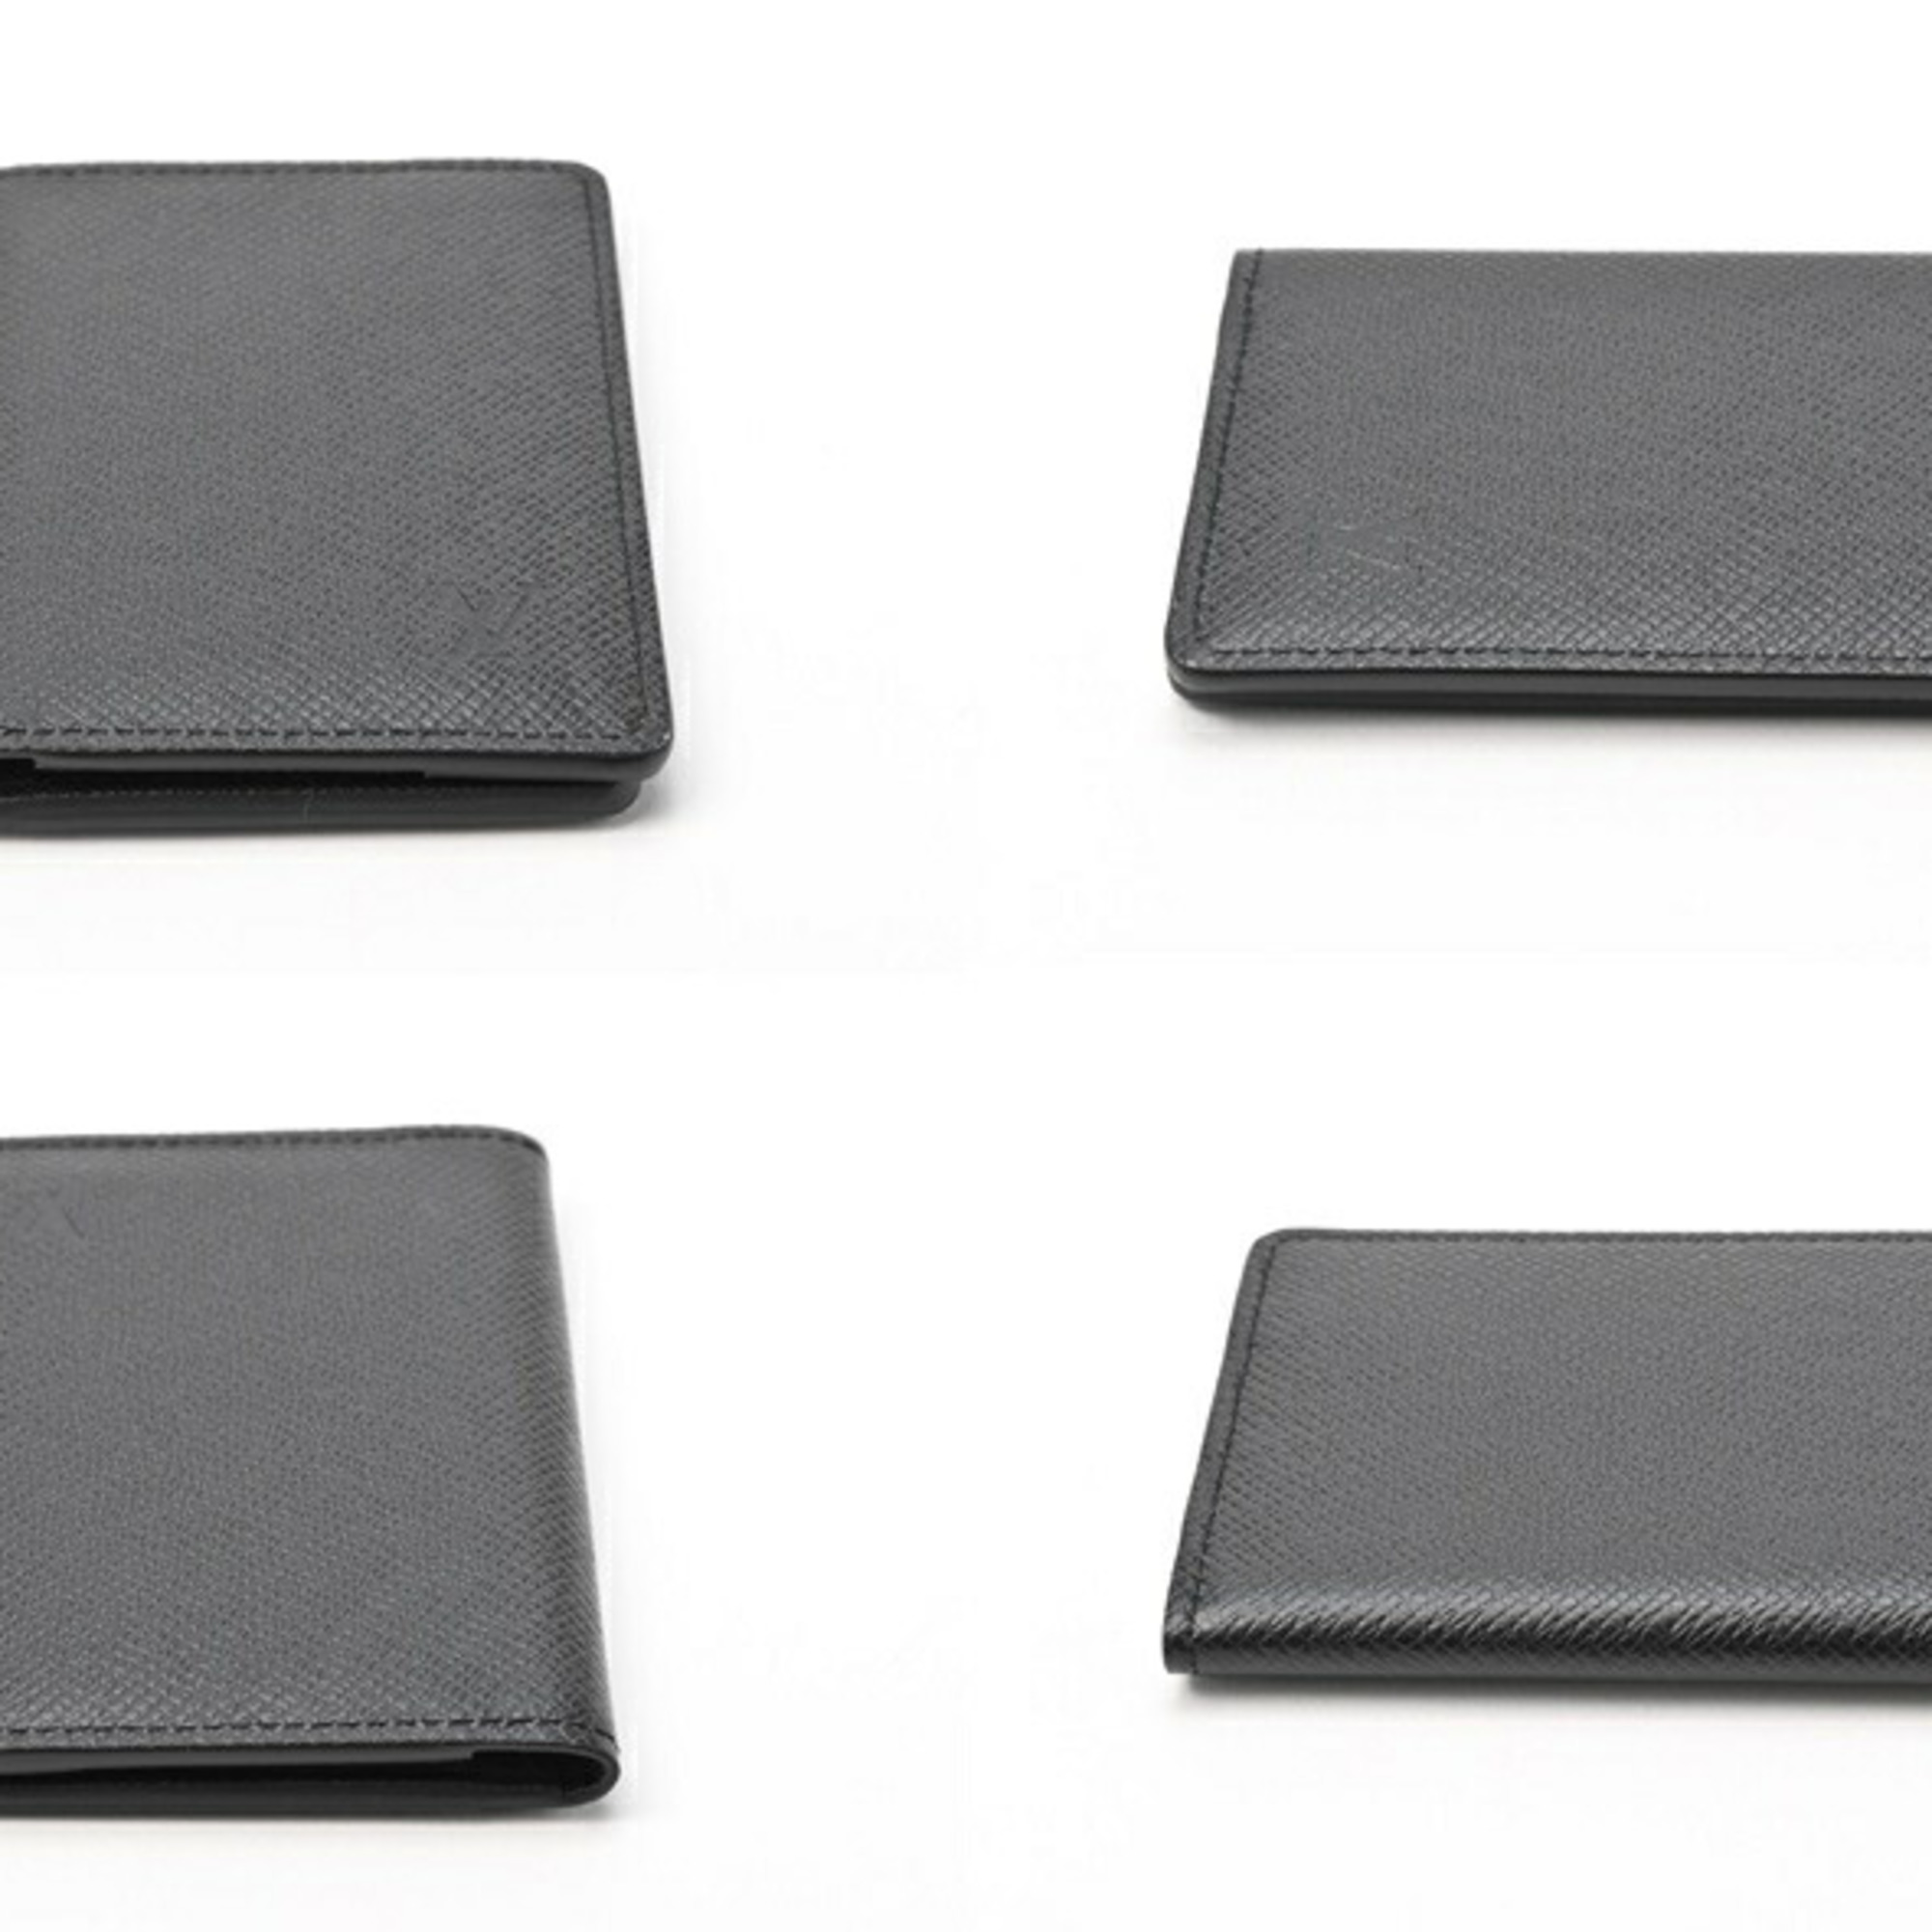 Louis Vuitton Business Card Holder/Card Case Pass Organizer de Poche M30537 Taiga Noir (Black) S-155279